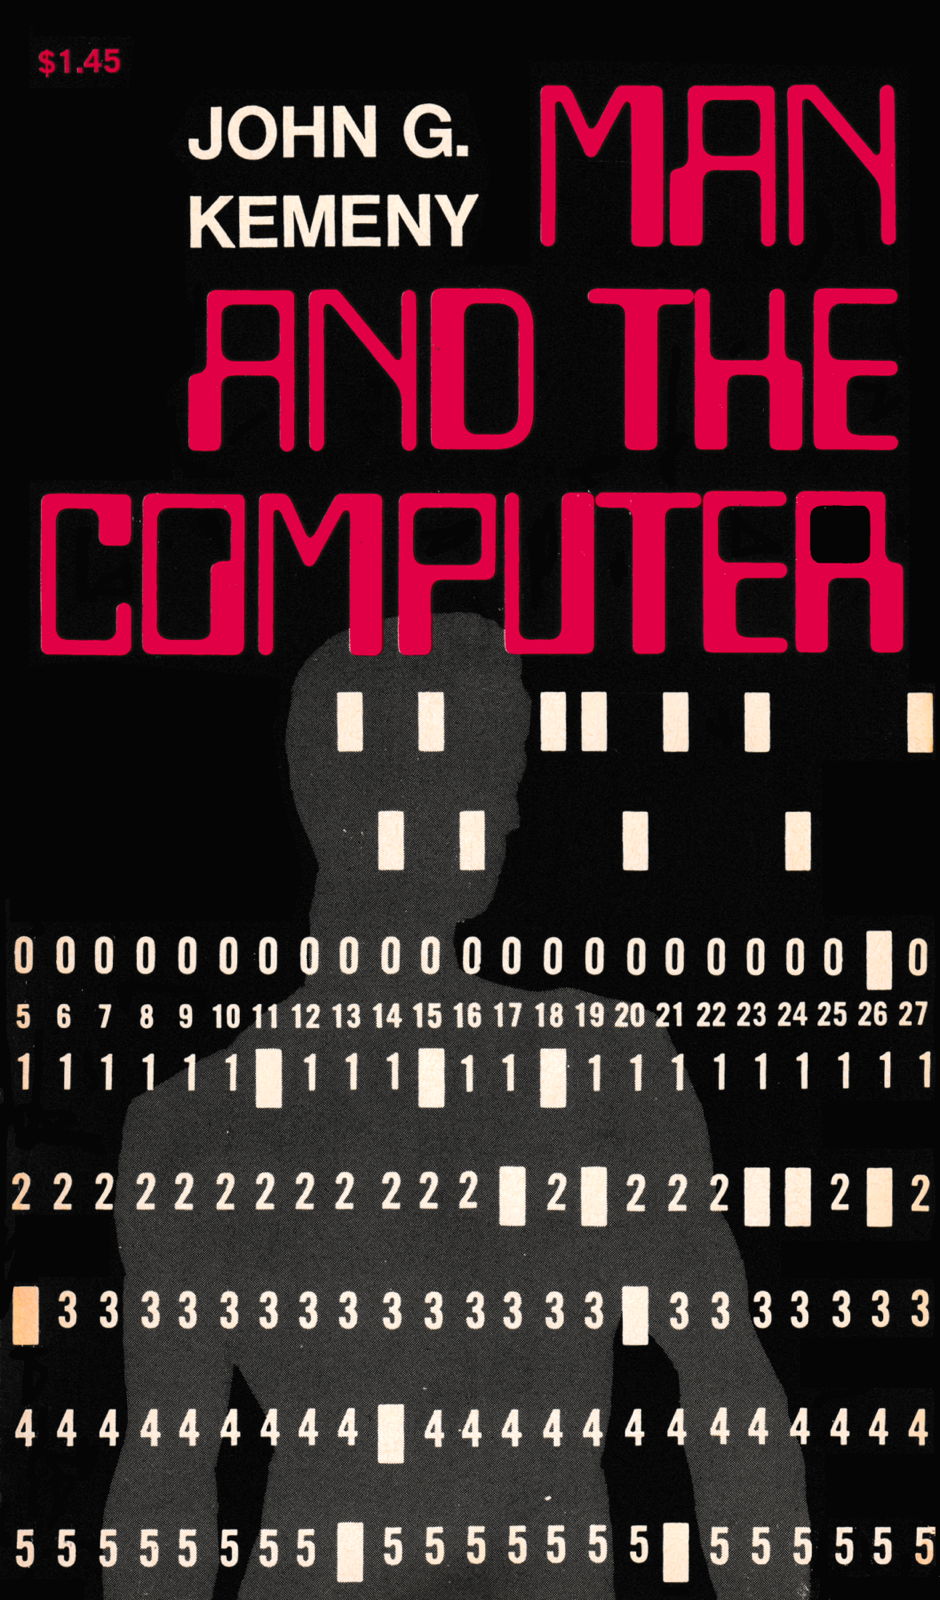 Man and the Computer: John G. Kemeny’s “Man and the Computer” paperback cover.; computer history; John G. Kemeny